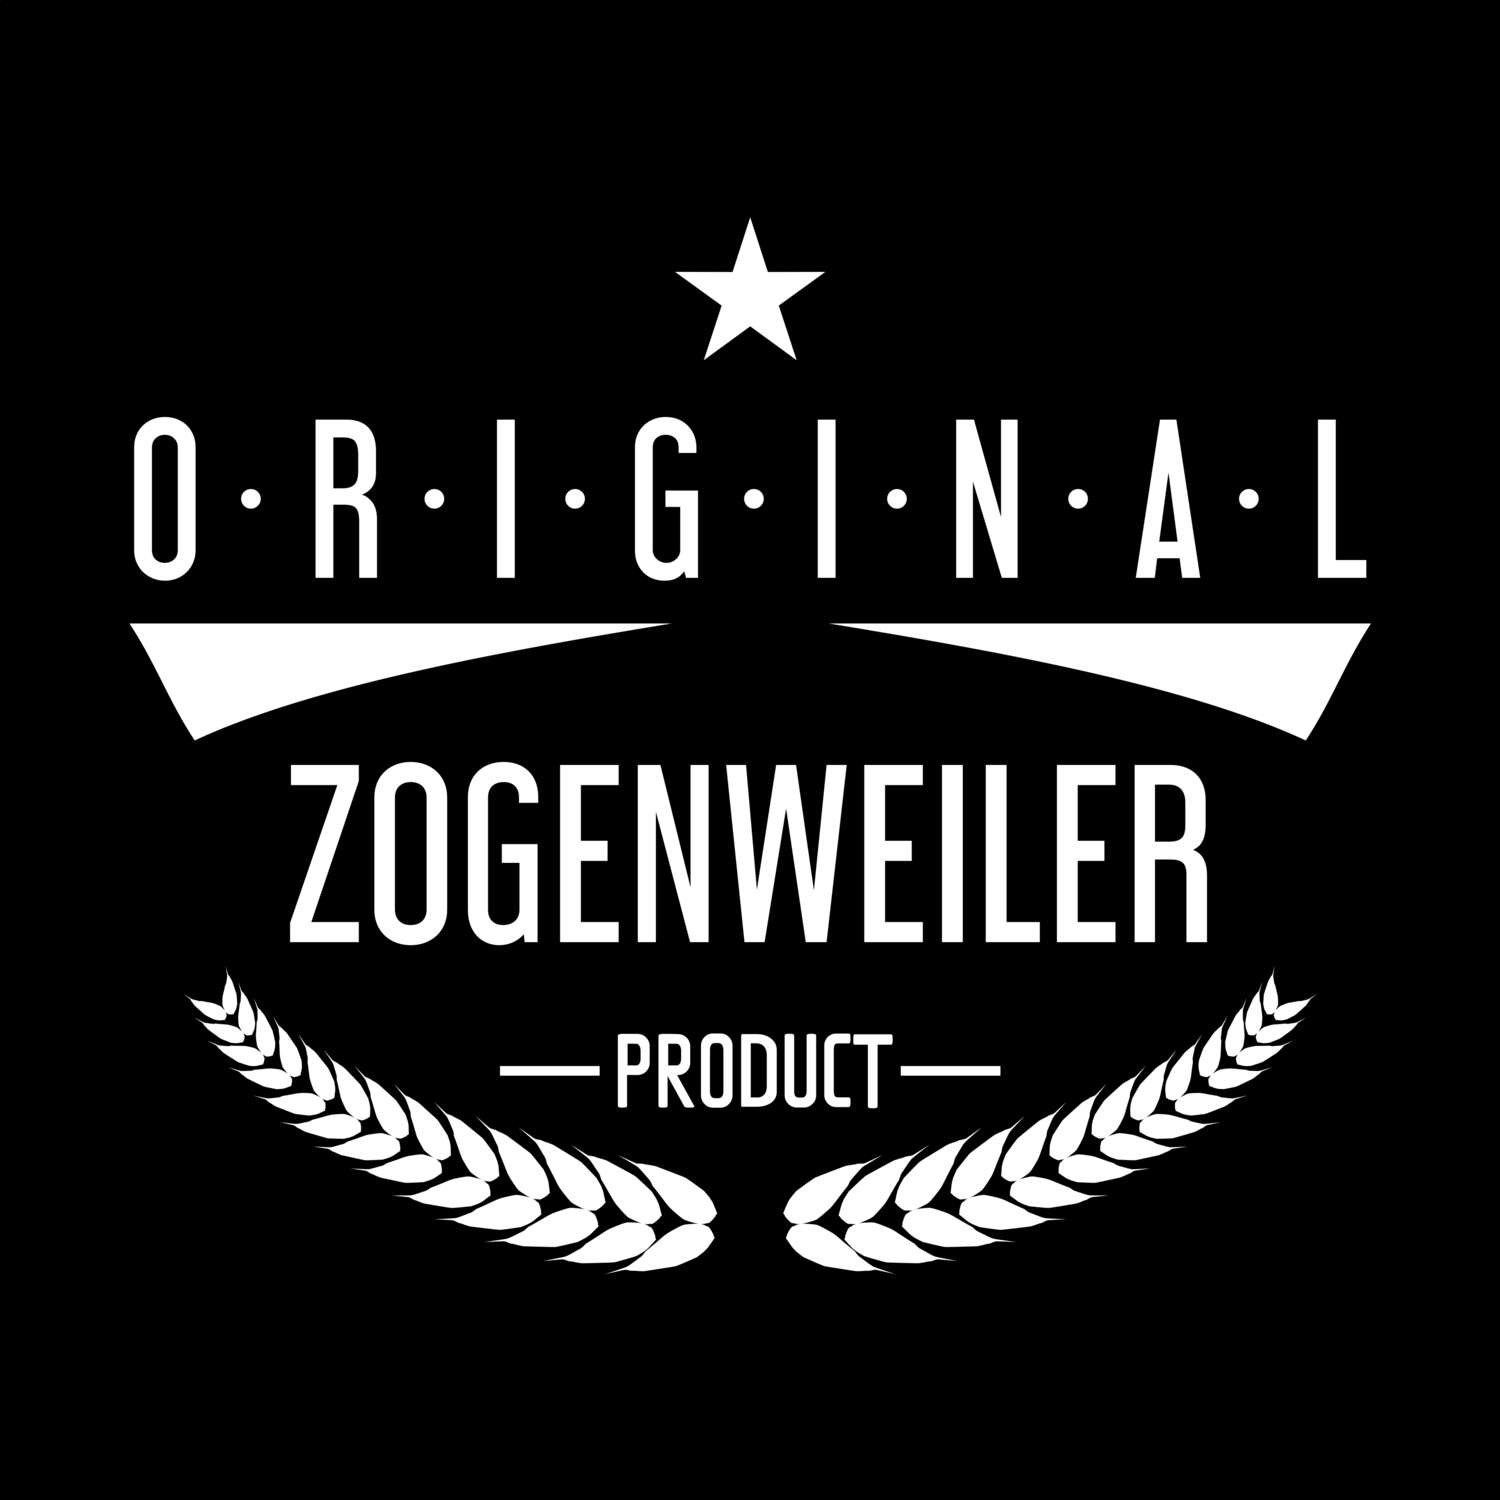 Zogenweiler T-Shirt »Original Product«